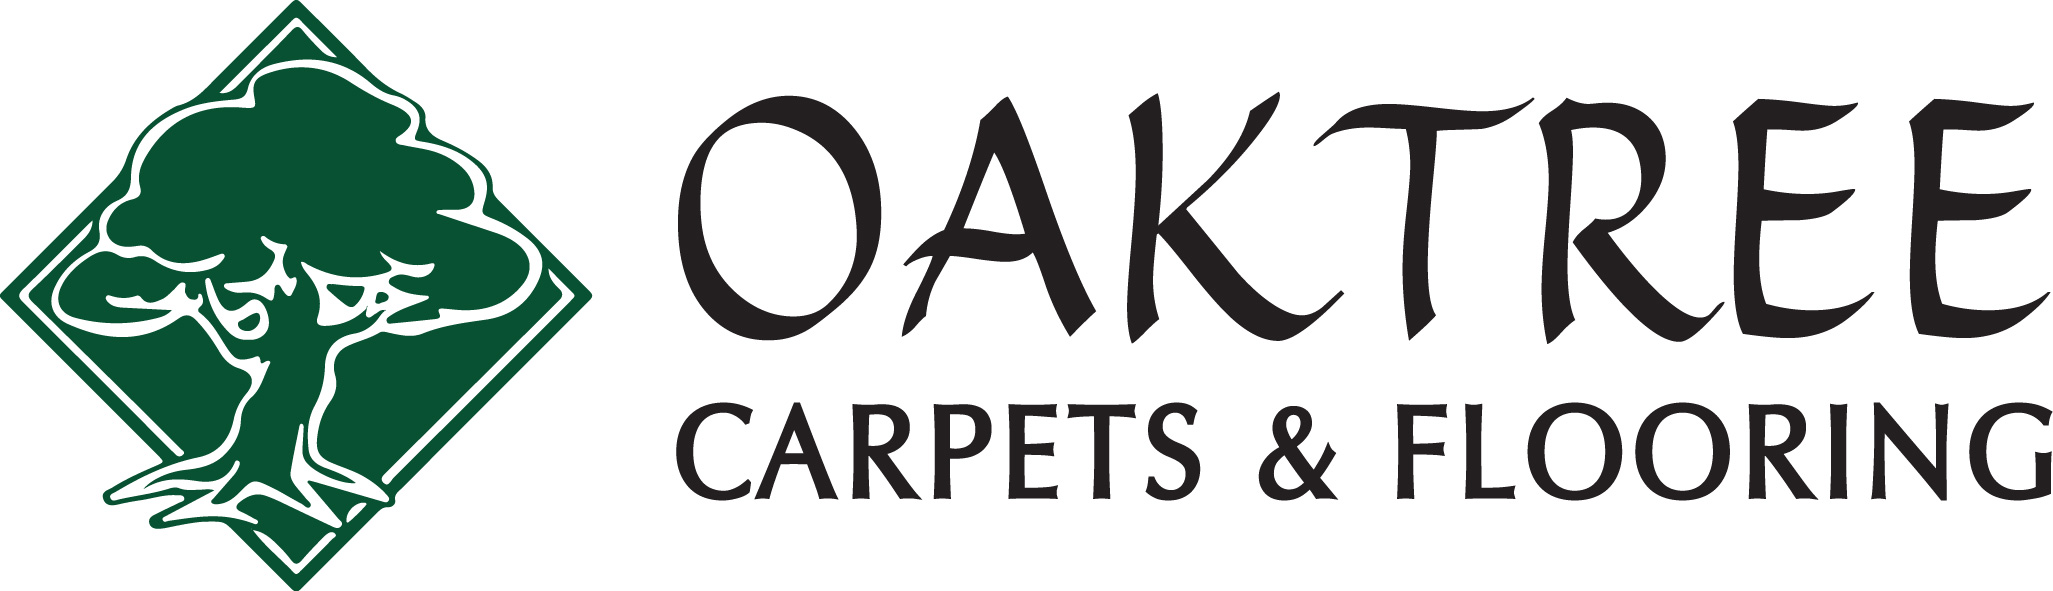 Oaktree Carpets & Flooring